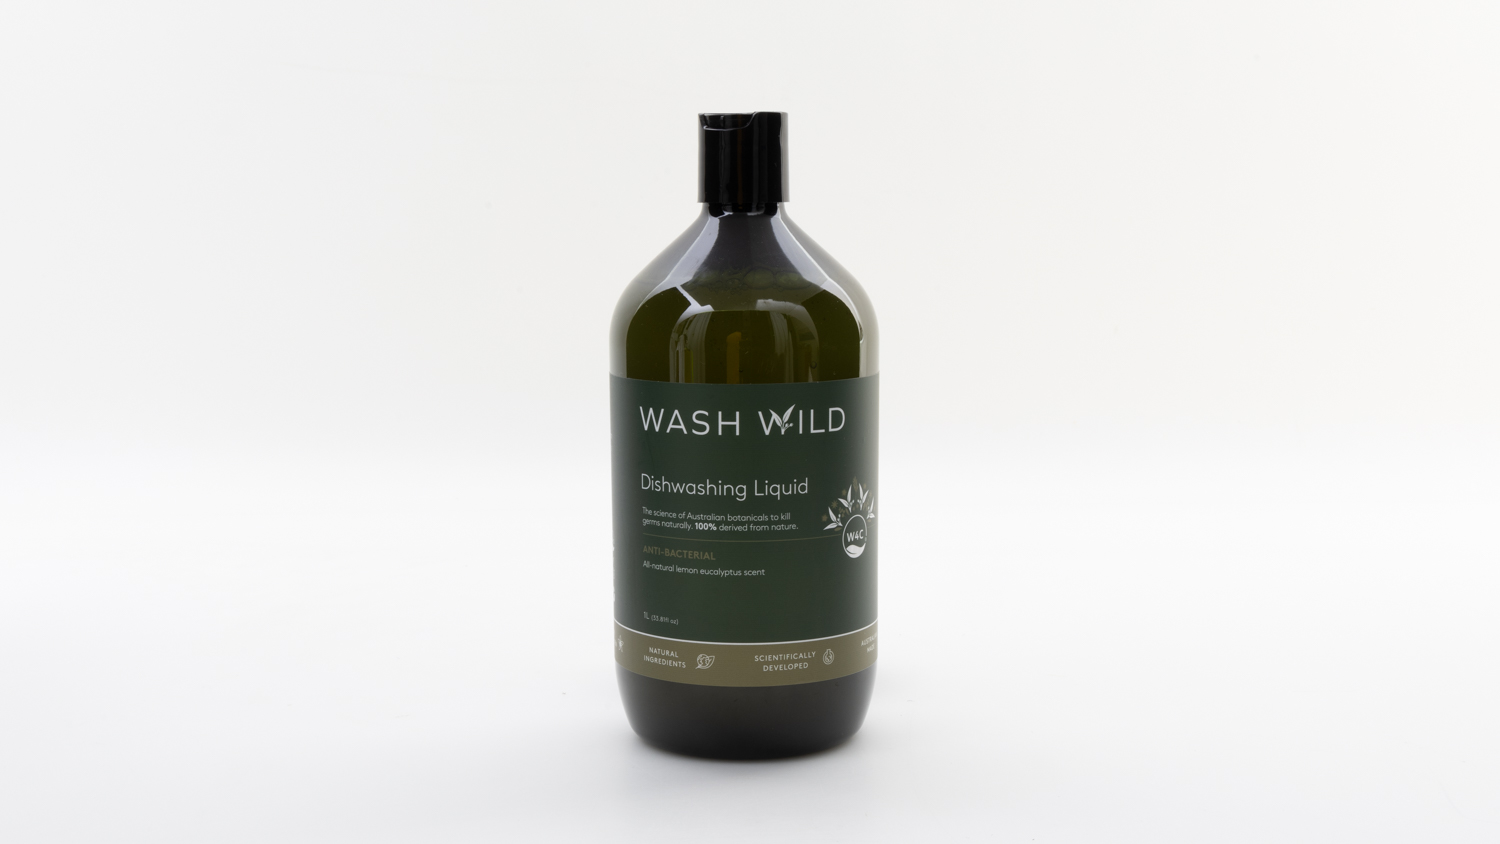 Wash Wild Dishwashing Liquid carousel image